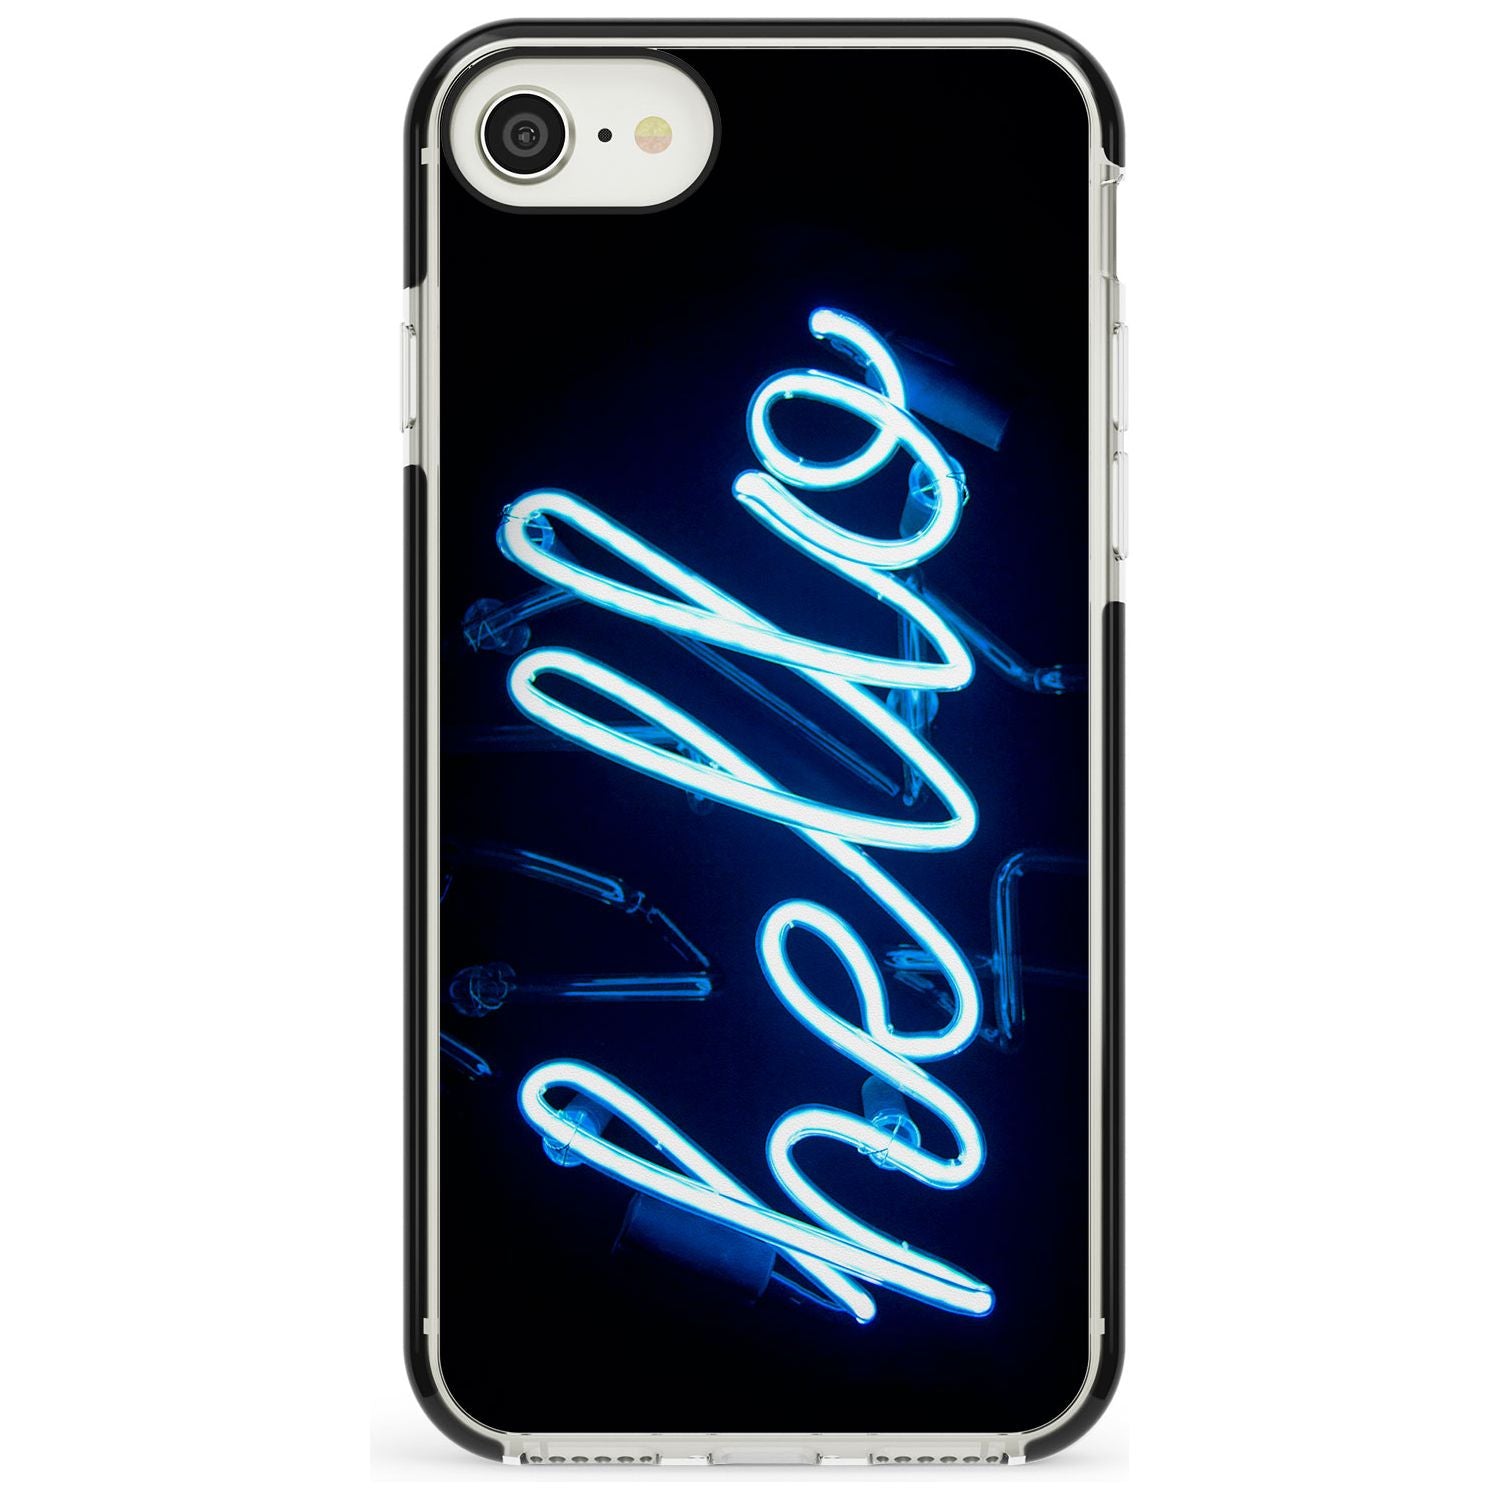 "Hello" Blue Cursive Neon Sign Black Impact Phone Case for iPhone SE 8 7 Plus